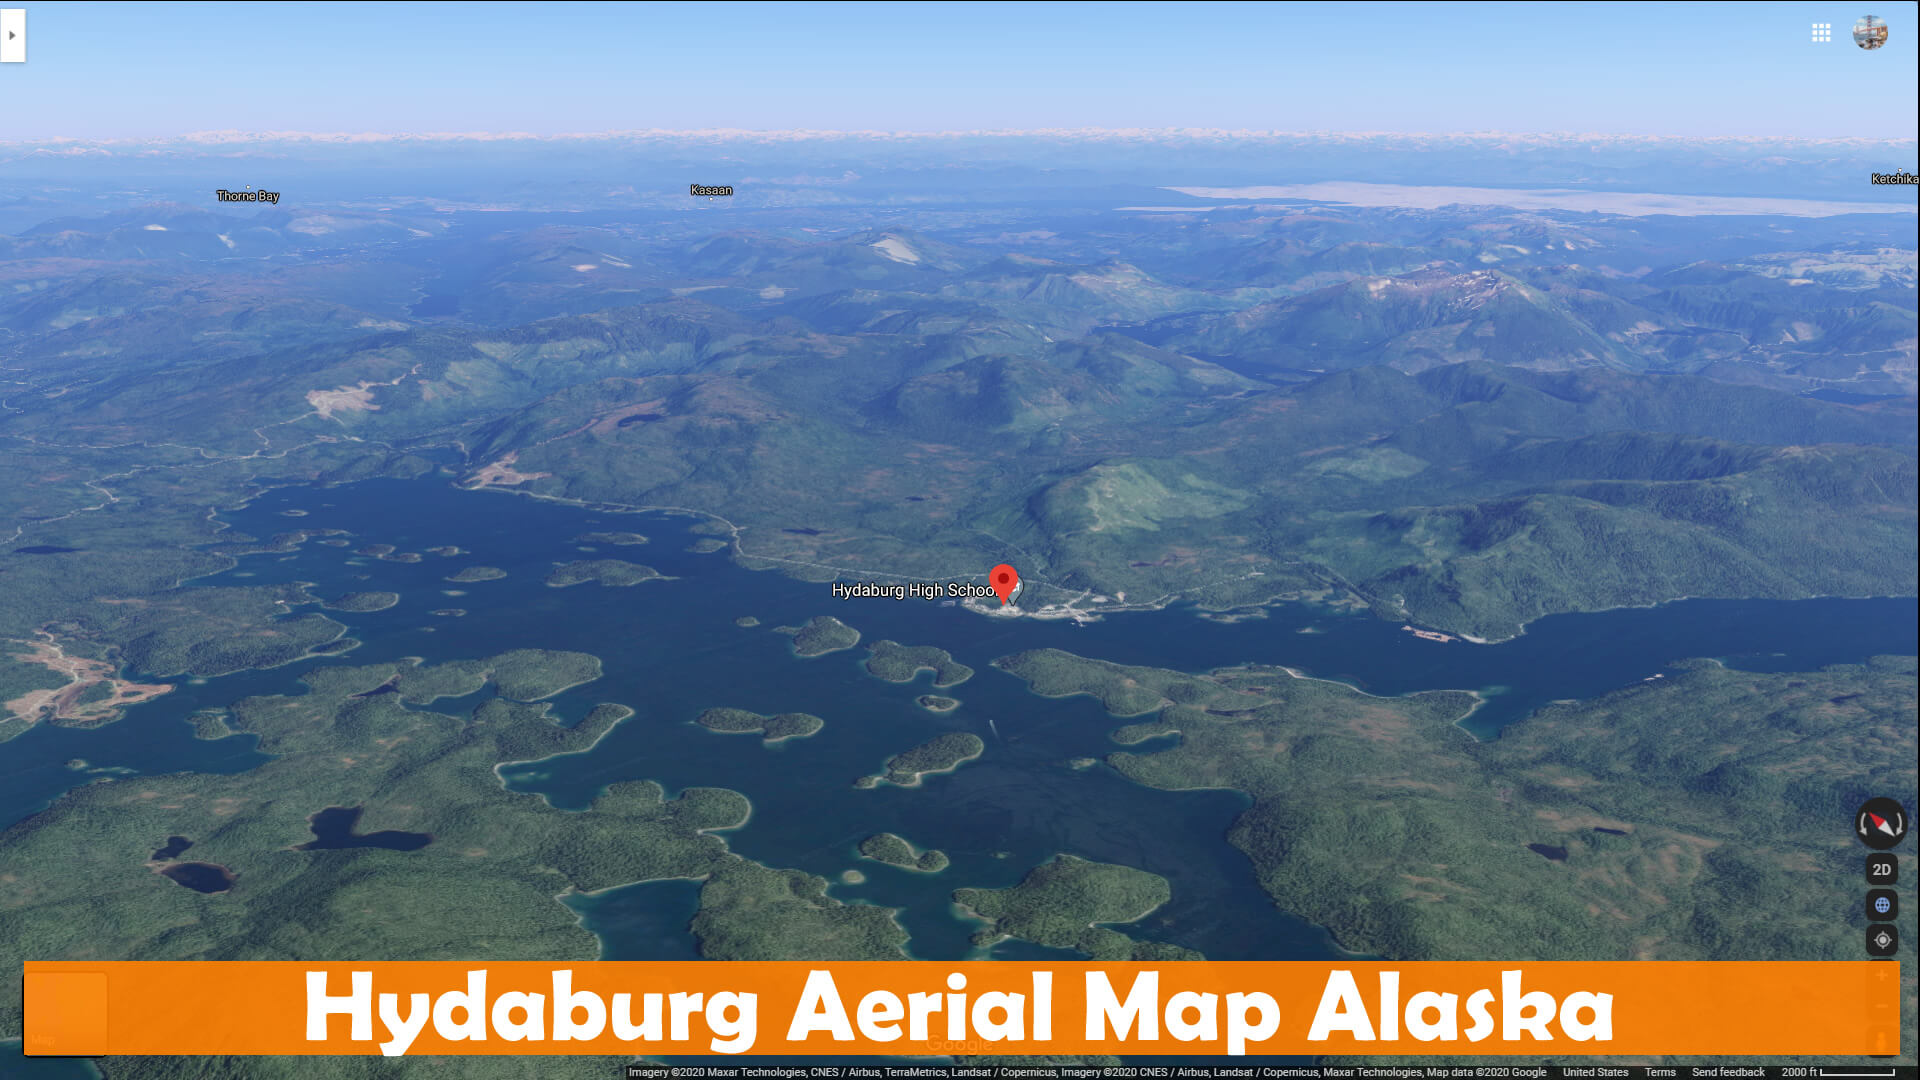 Hydaburg Aerial Map Alaska